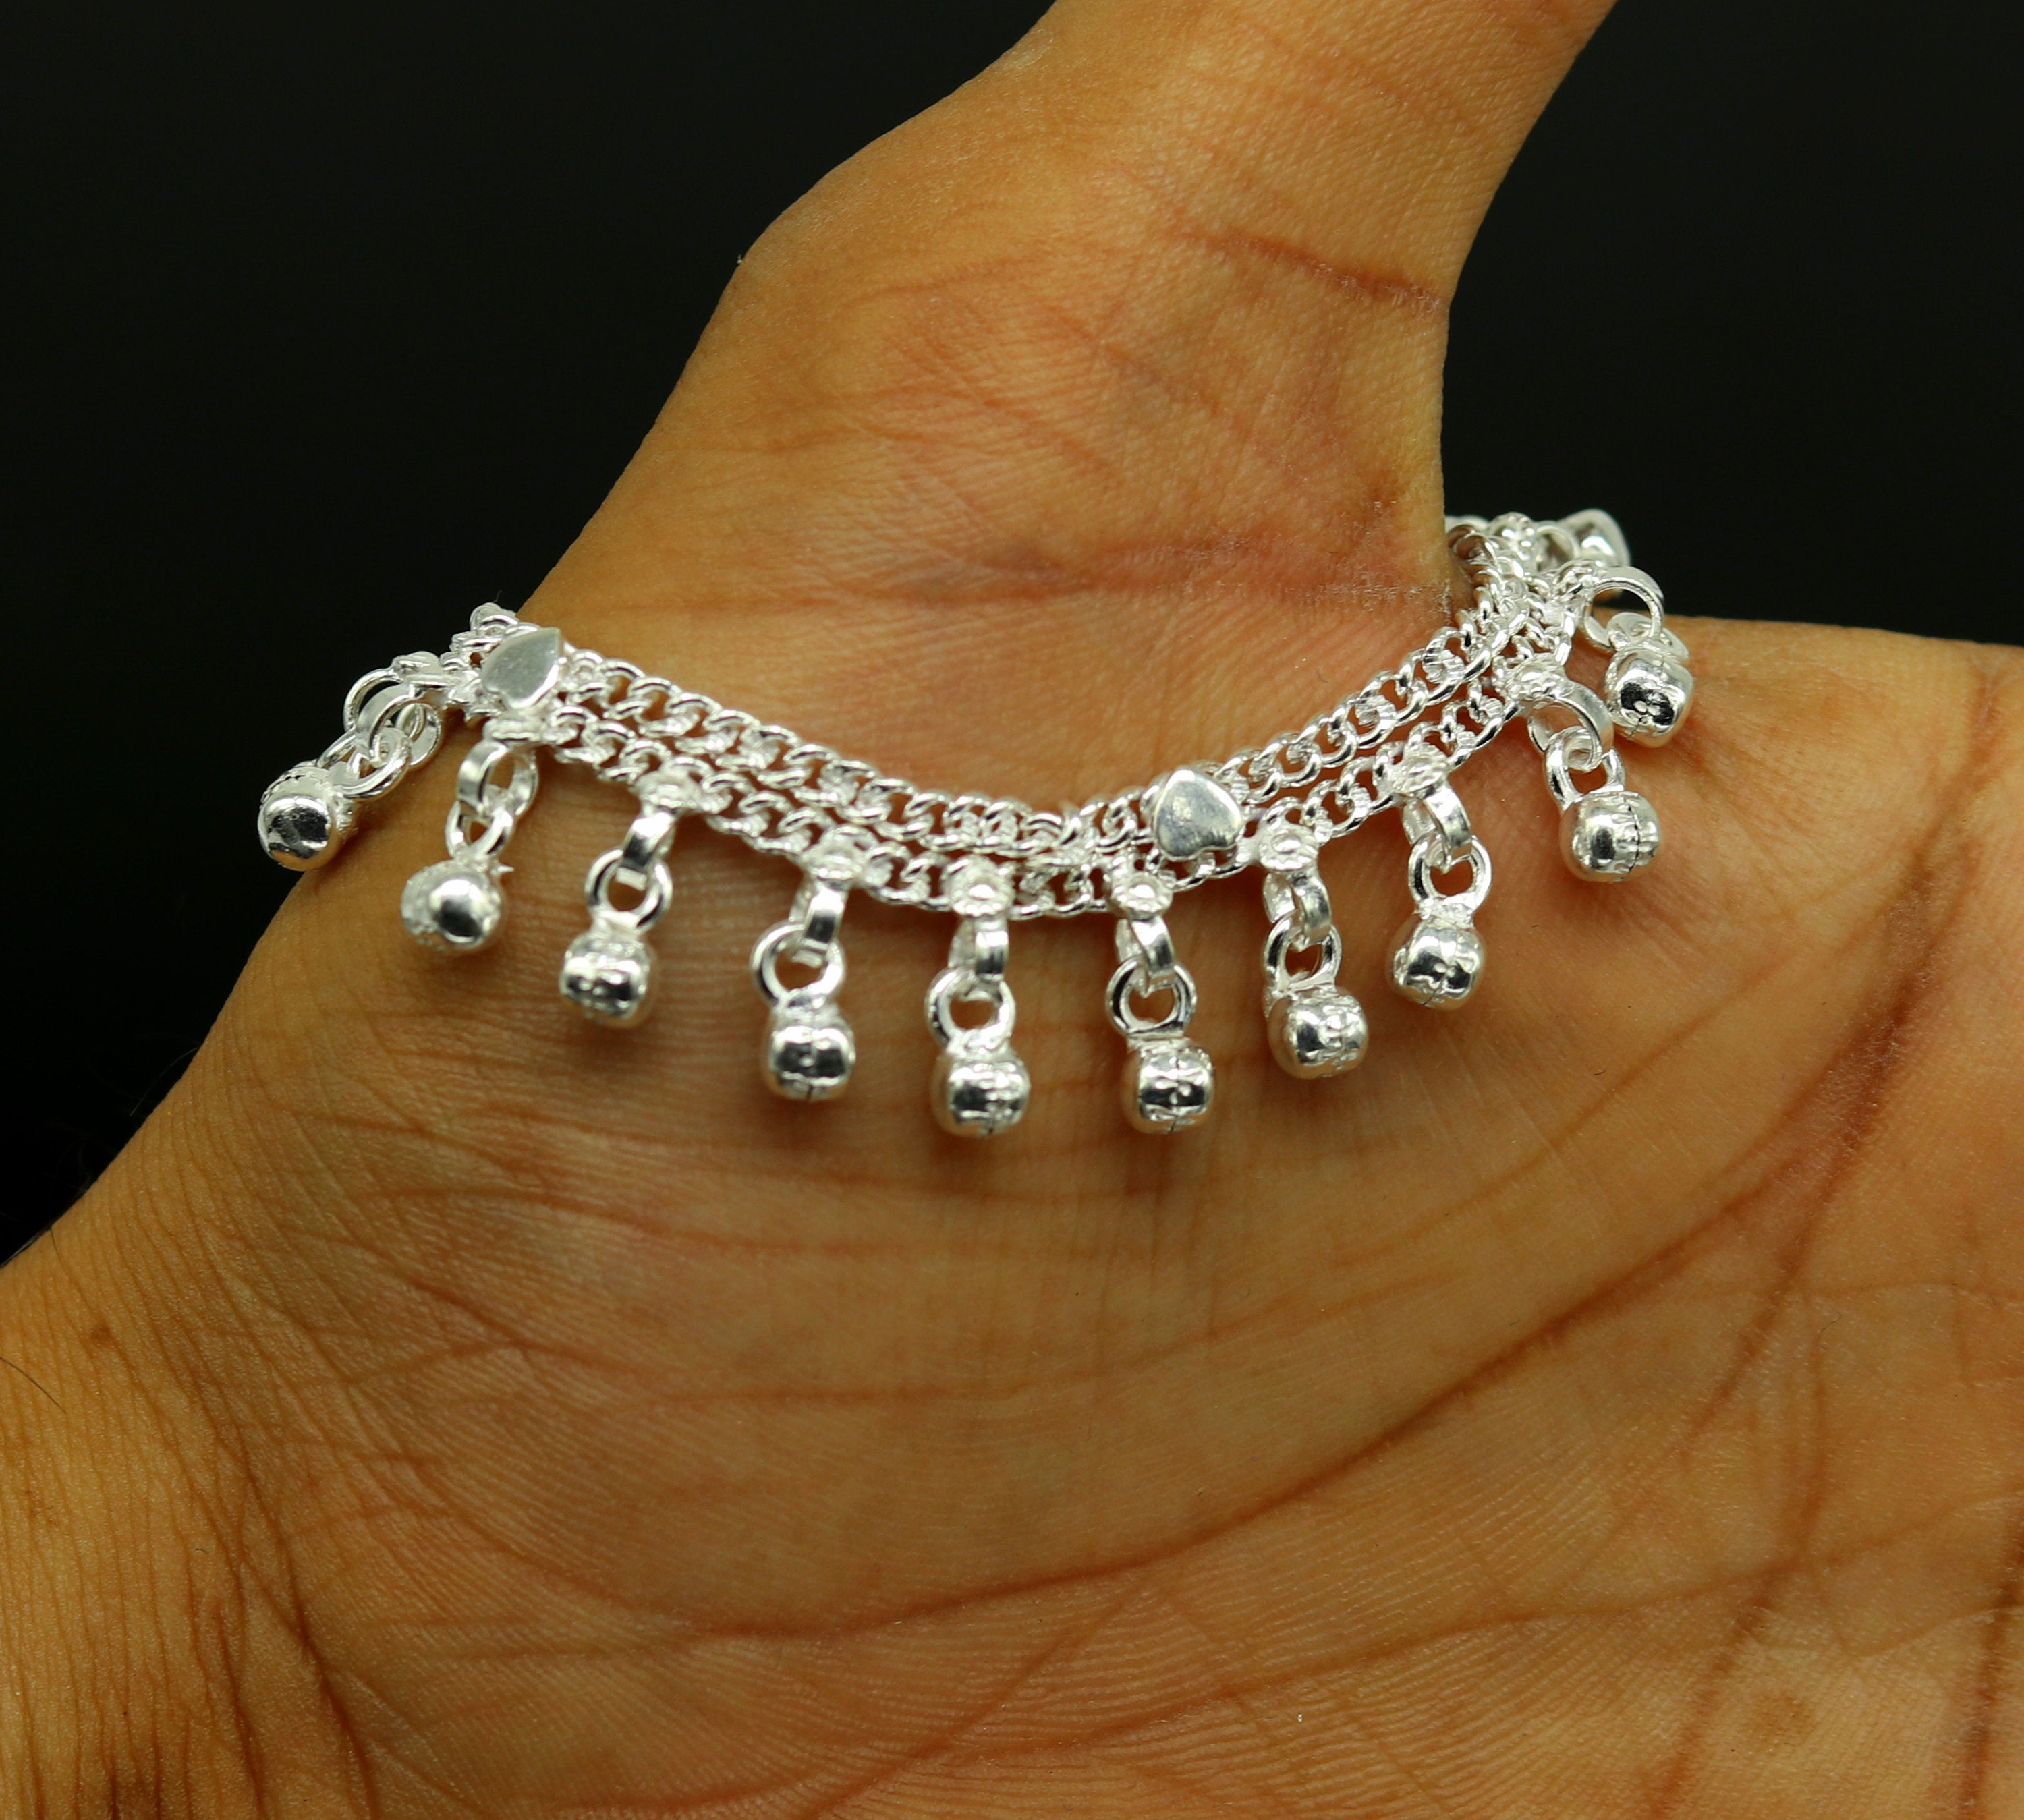 925 sterling silver baby nazariya bracelet  gorgeous black beaded  adjustable kids jewelry charm bracelet from india bbr46  TRIBAL ORNAMENTS